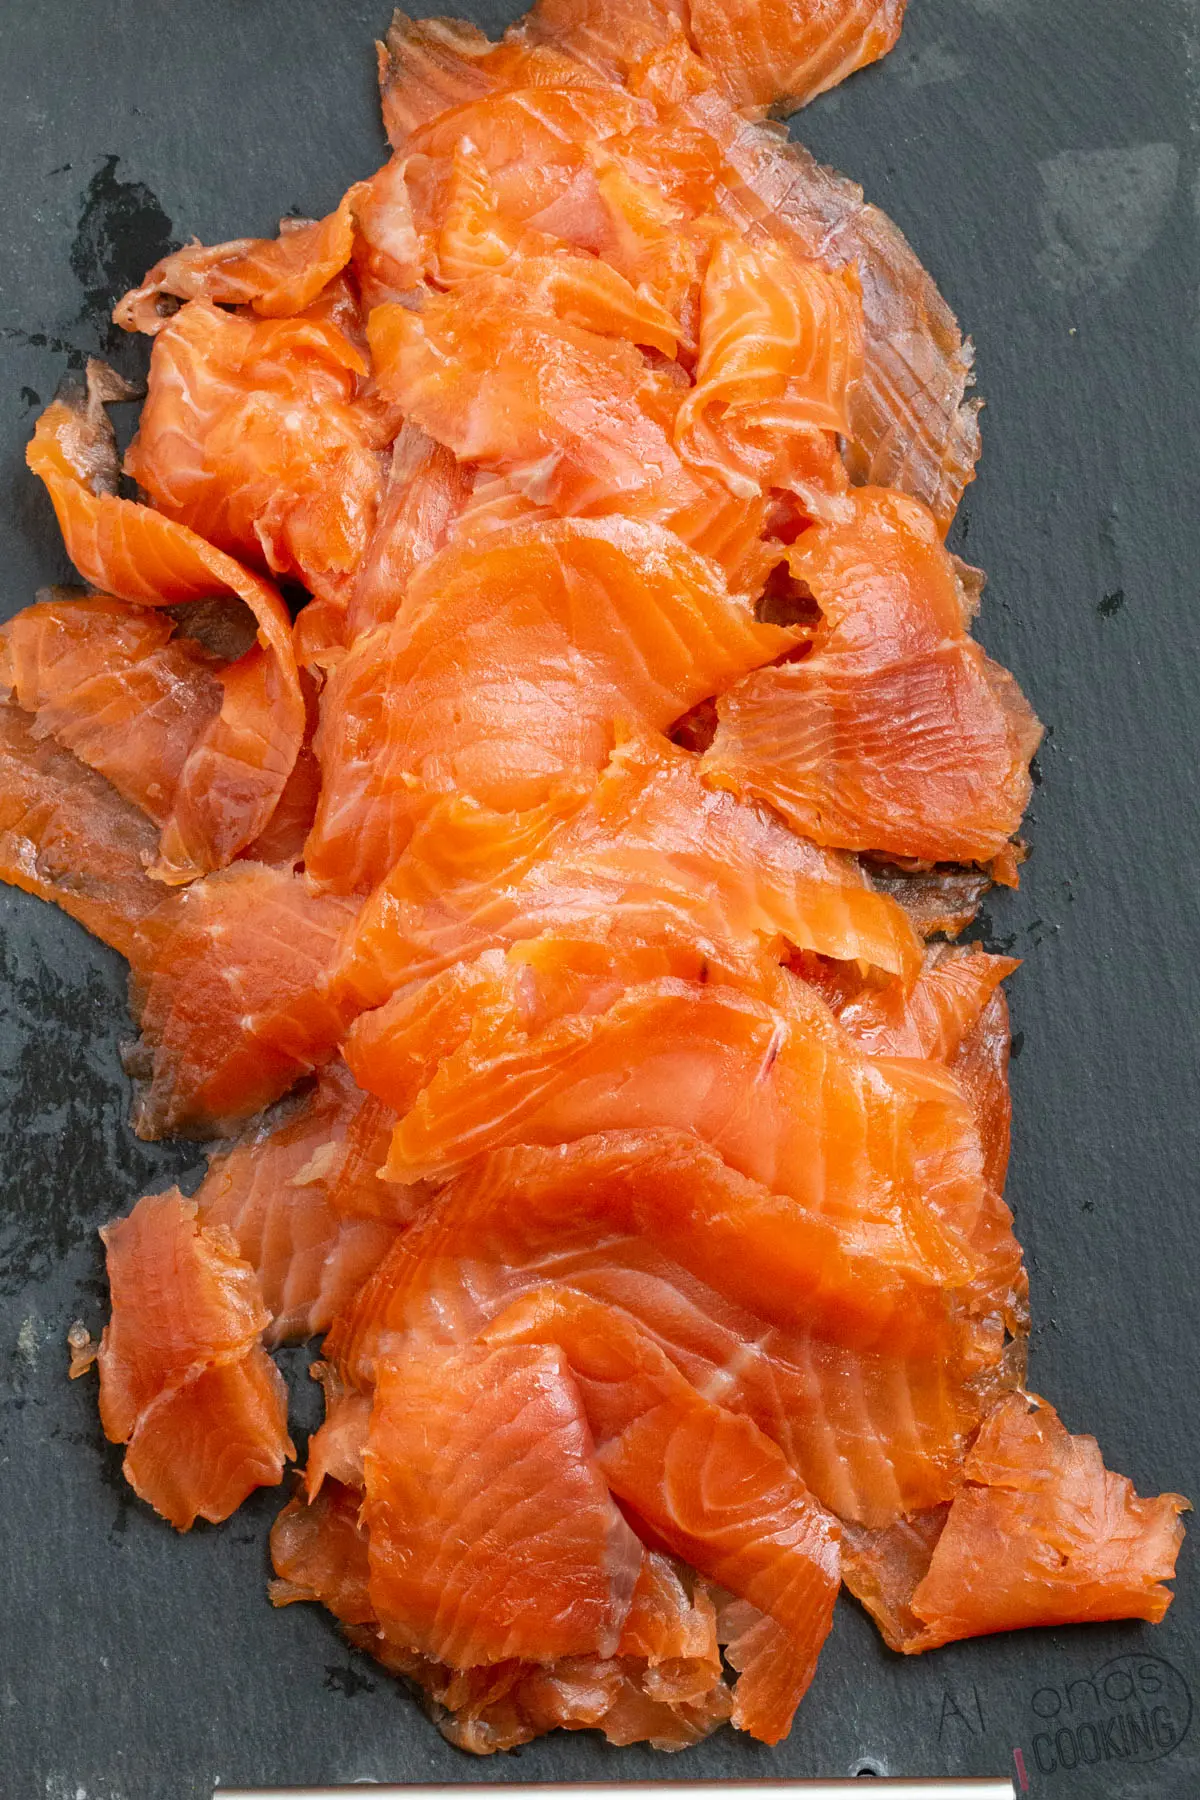 smoked salmon tastes fishy - Does smoked salmon have a fishy taste